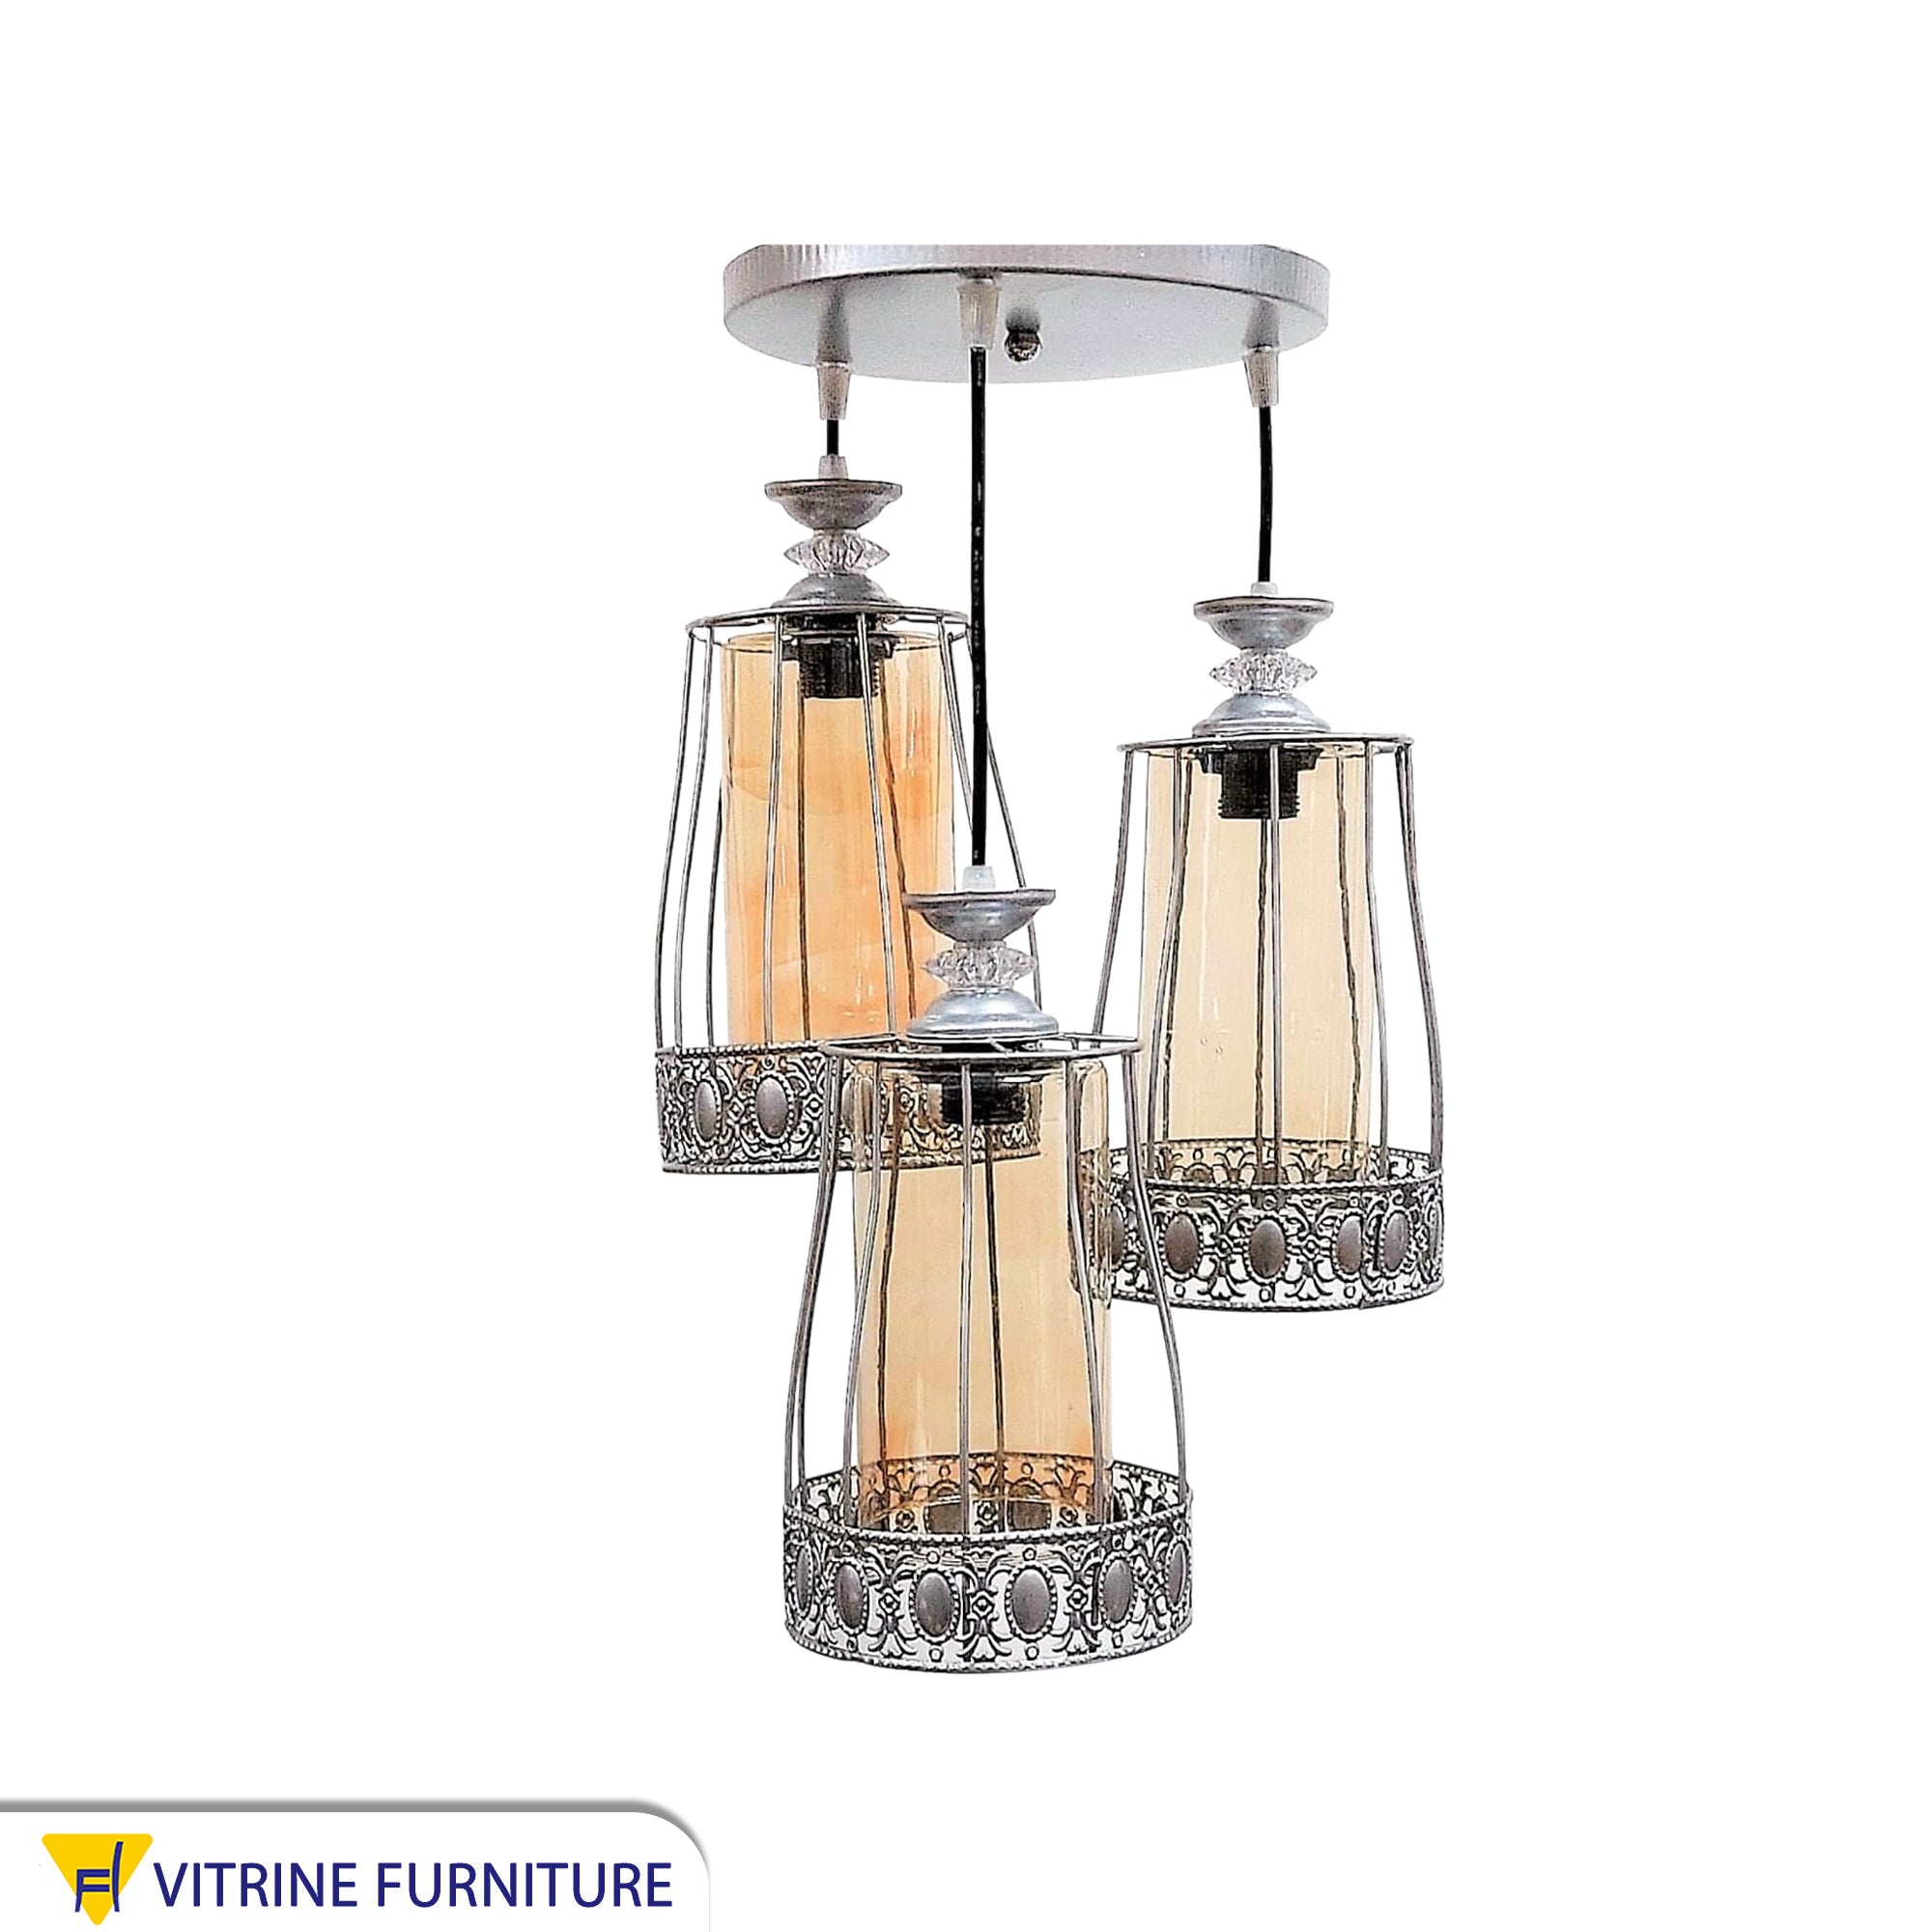 Triple chandelier with elegant design